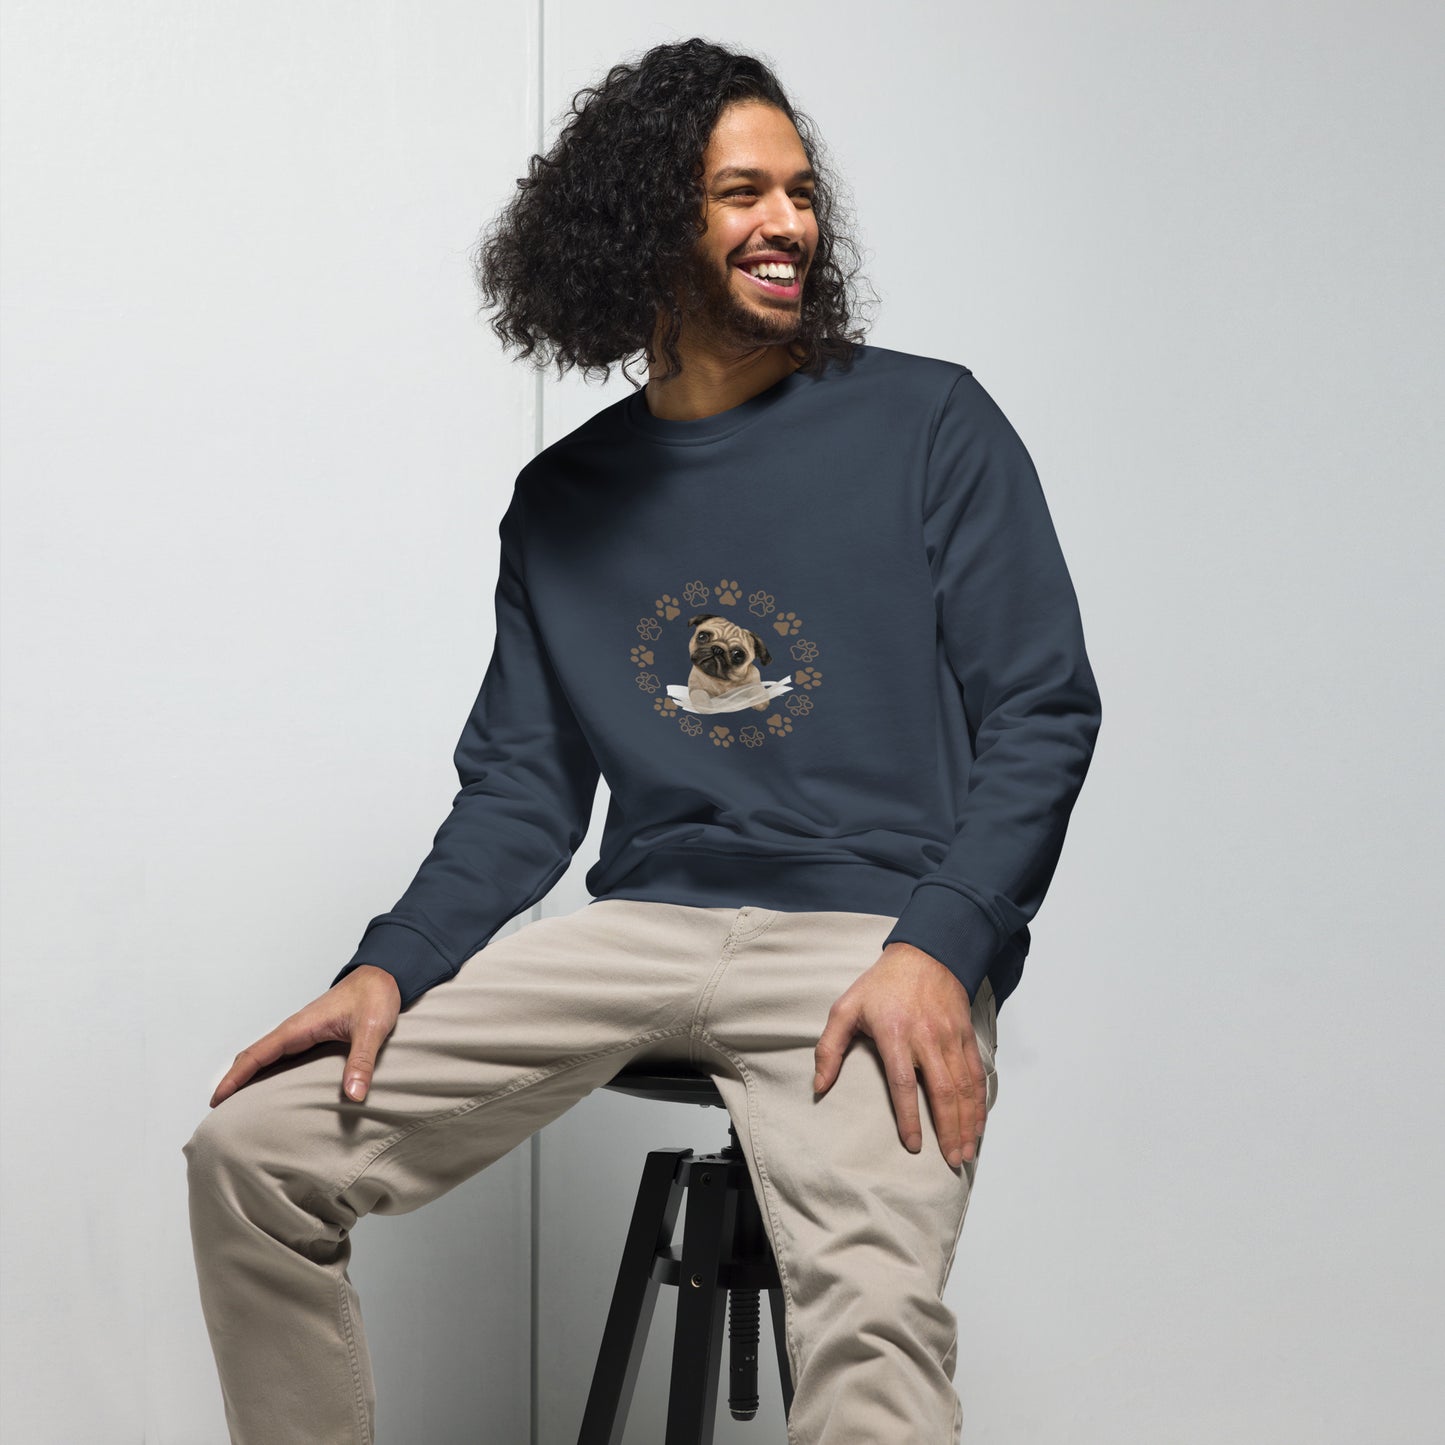 Unisex organic sweatshirt / Boston terrier lovers gift / dog lovers gifts / Gift for dog lovers